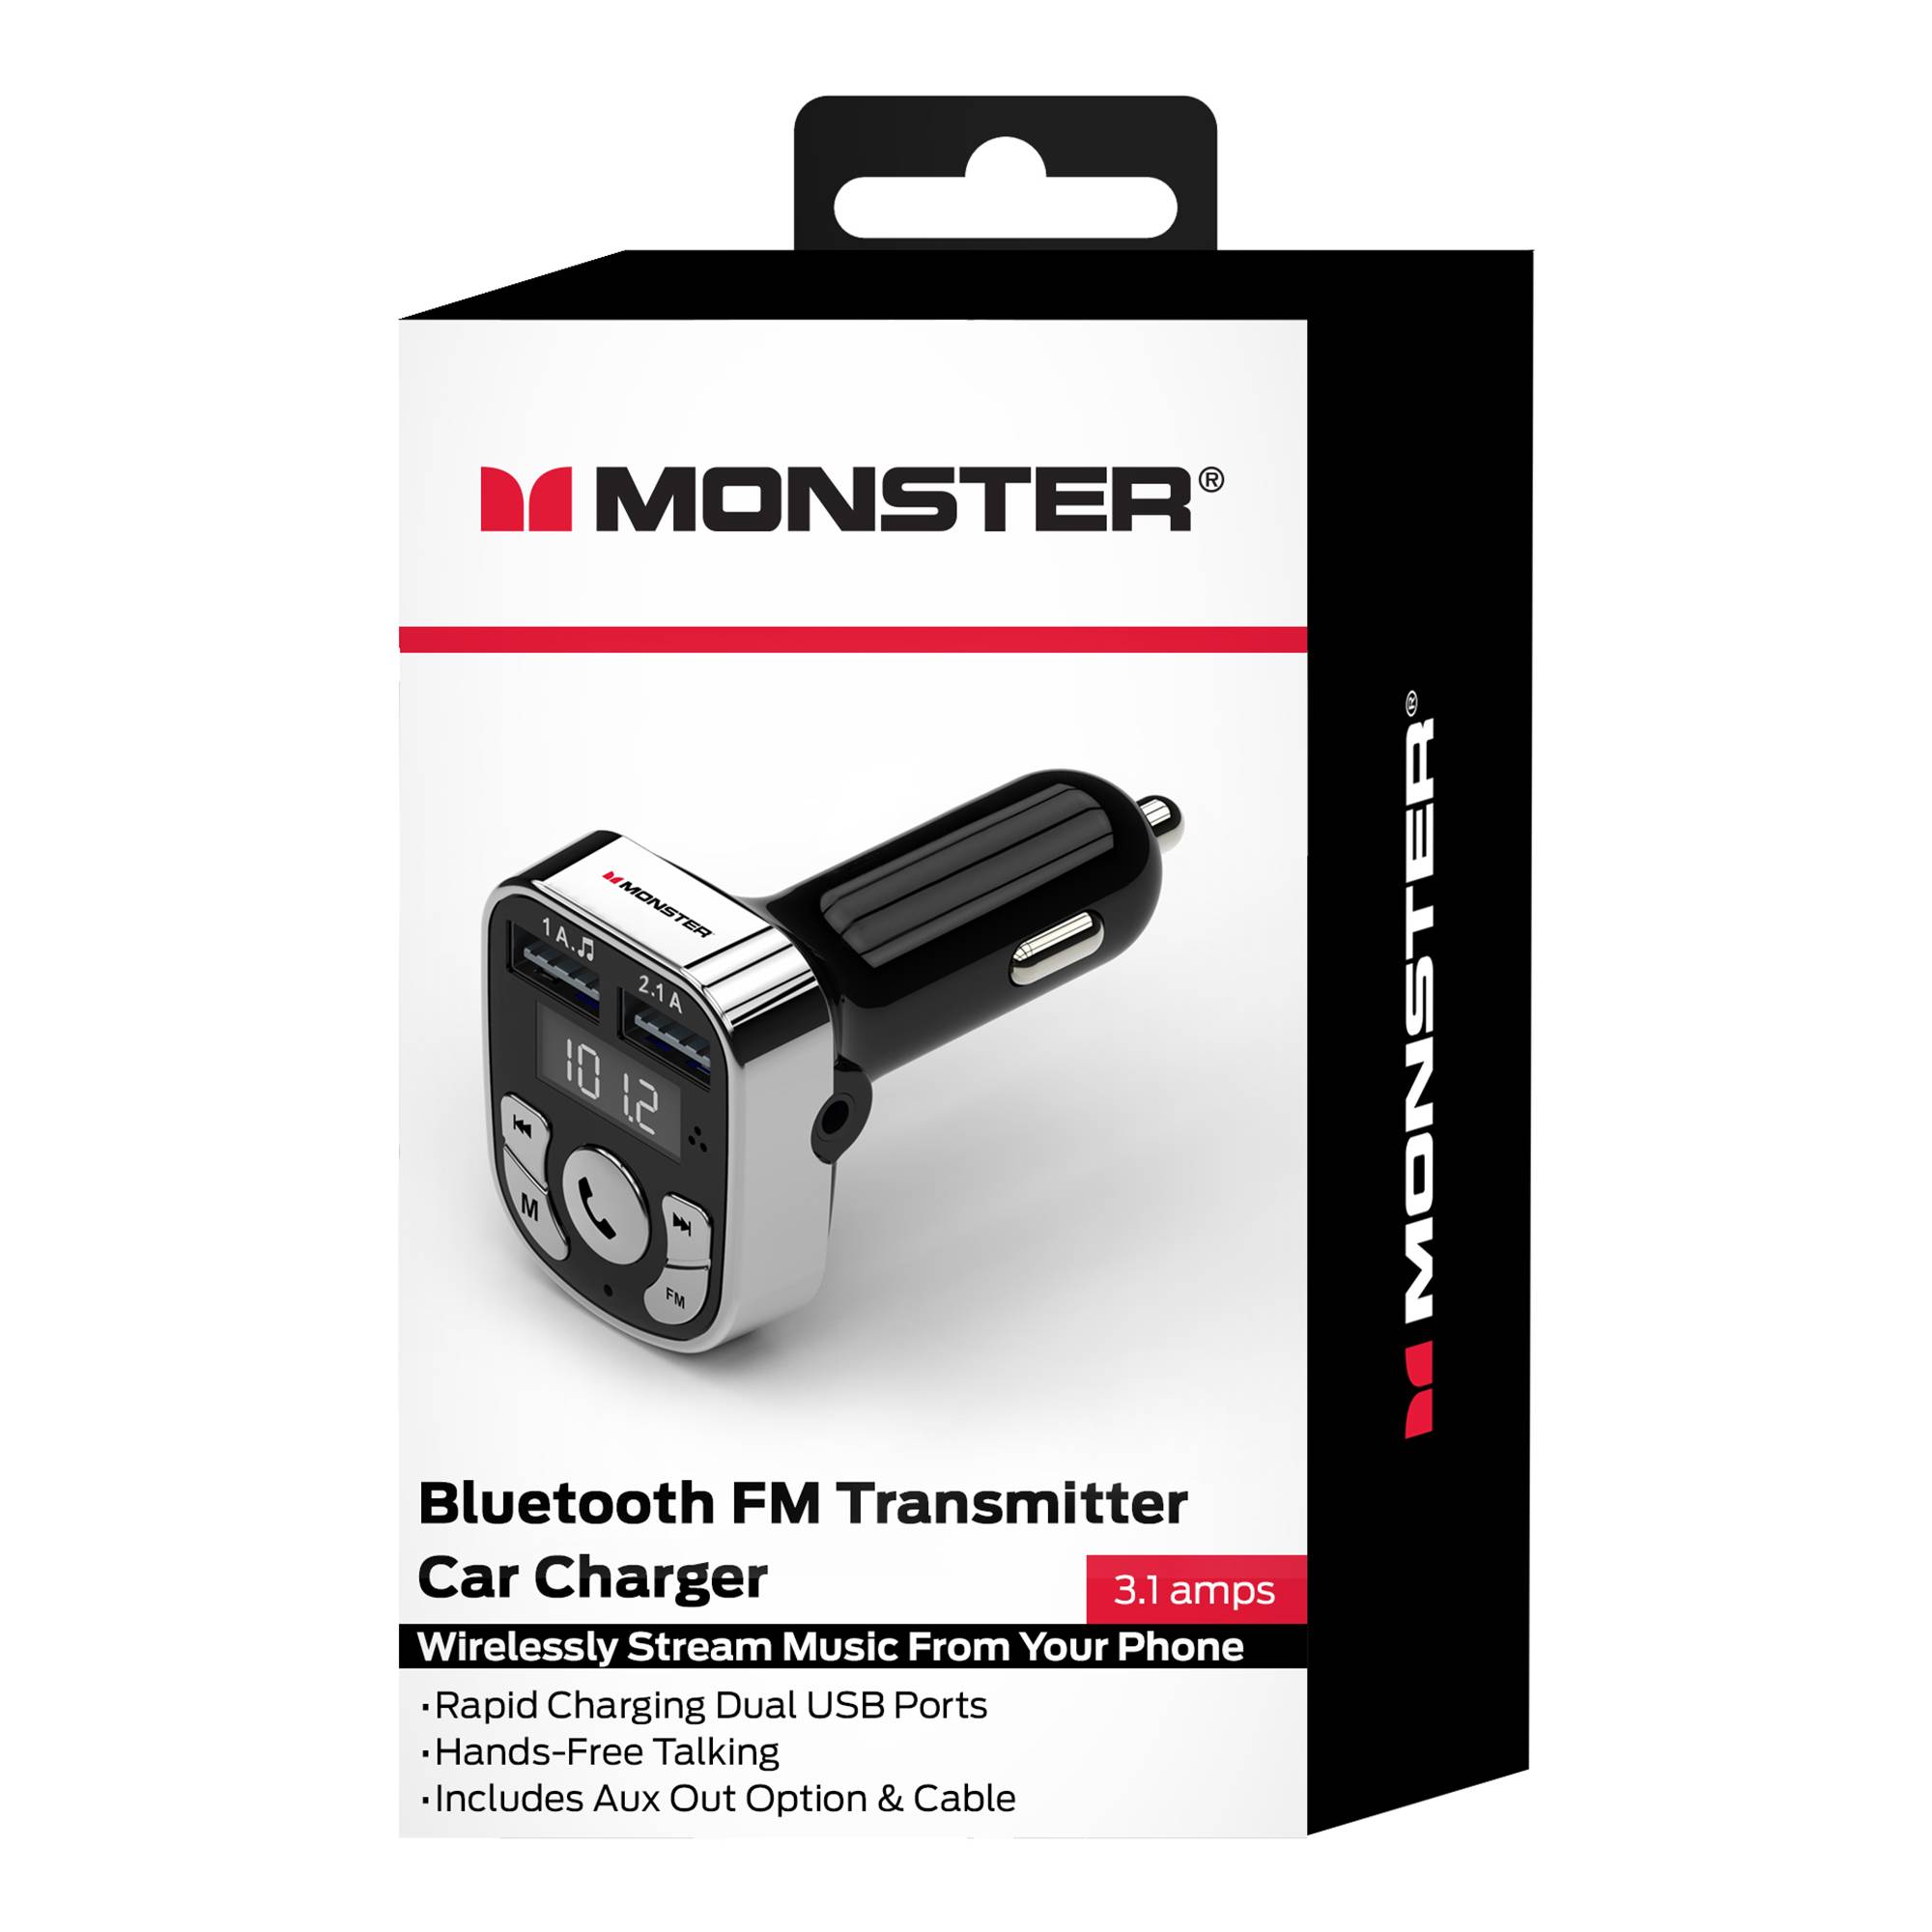 Monster Bluetooth Fm Transmitter Car Charger User Manual